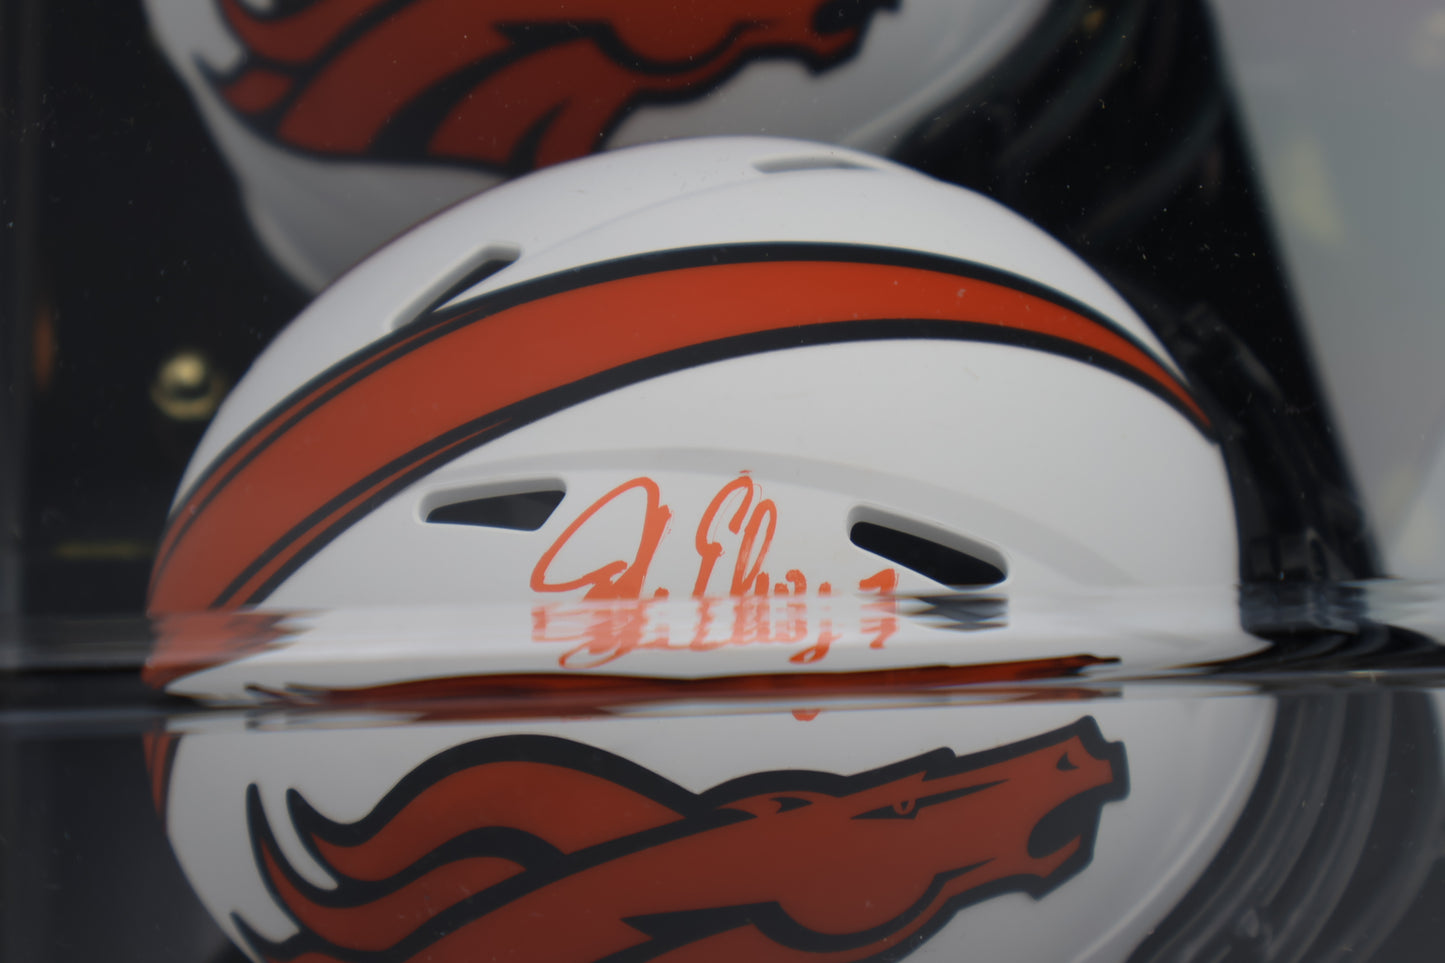 John Elway Denver Broncos Autographed Mini Helmet